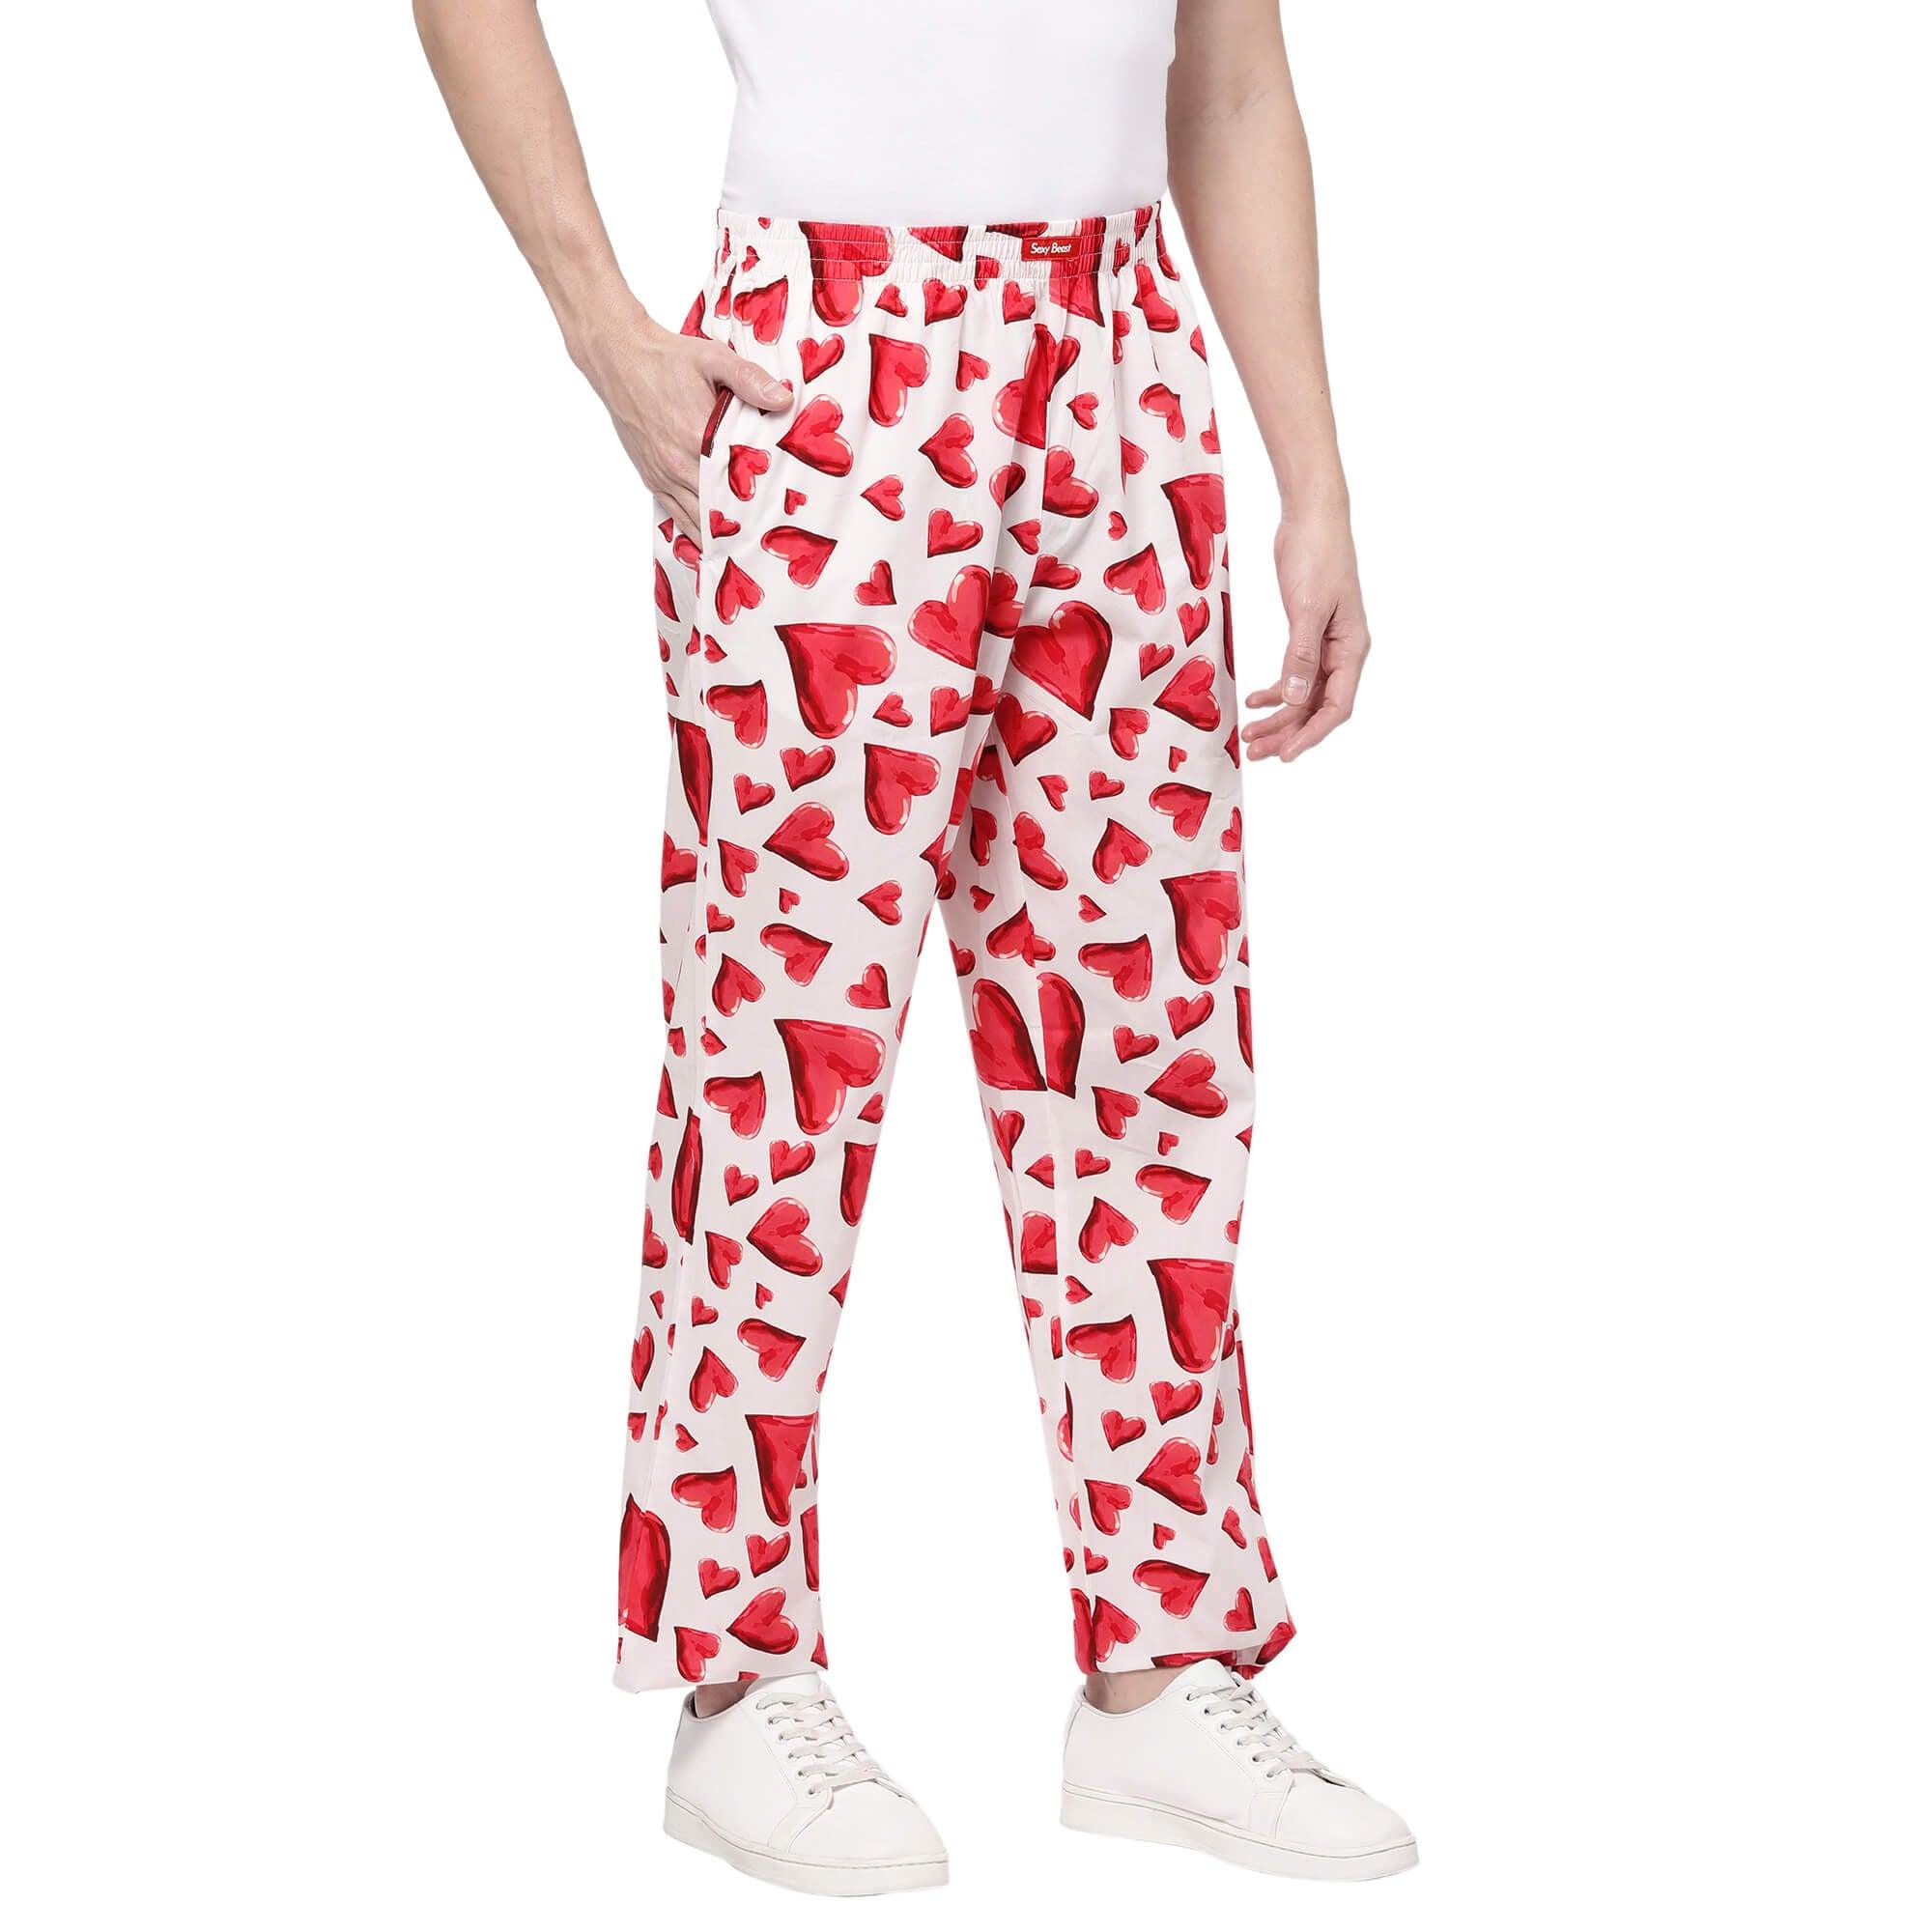 Valentine Hearts Printed Pyjamas For Men Online